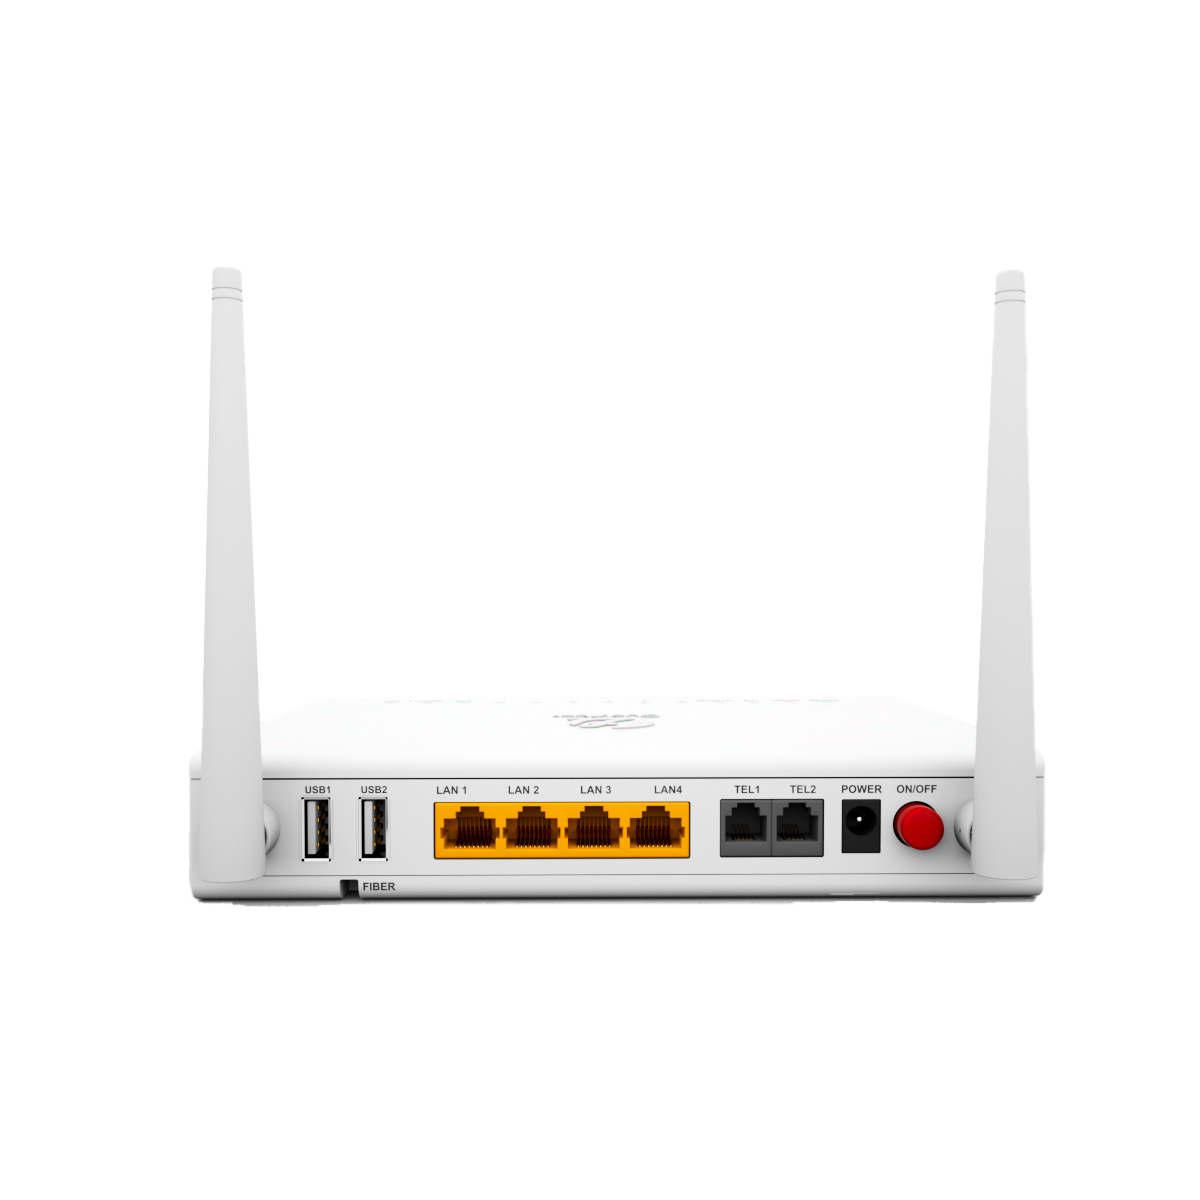 XGPON Wi-Fi 6 ONU Series Featured Image